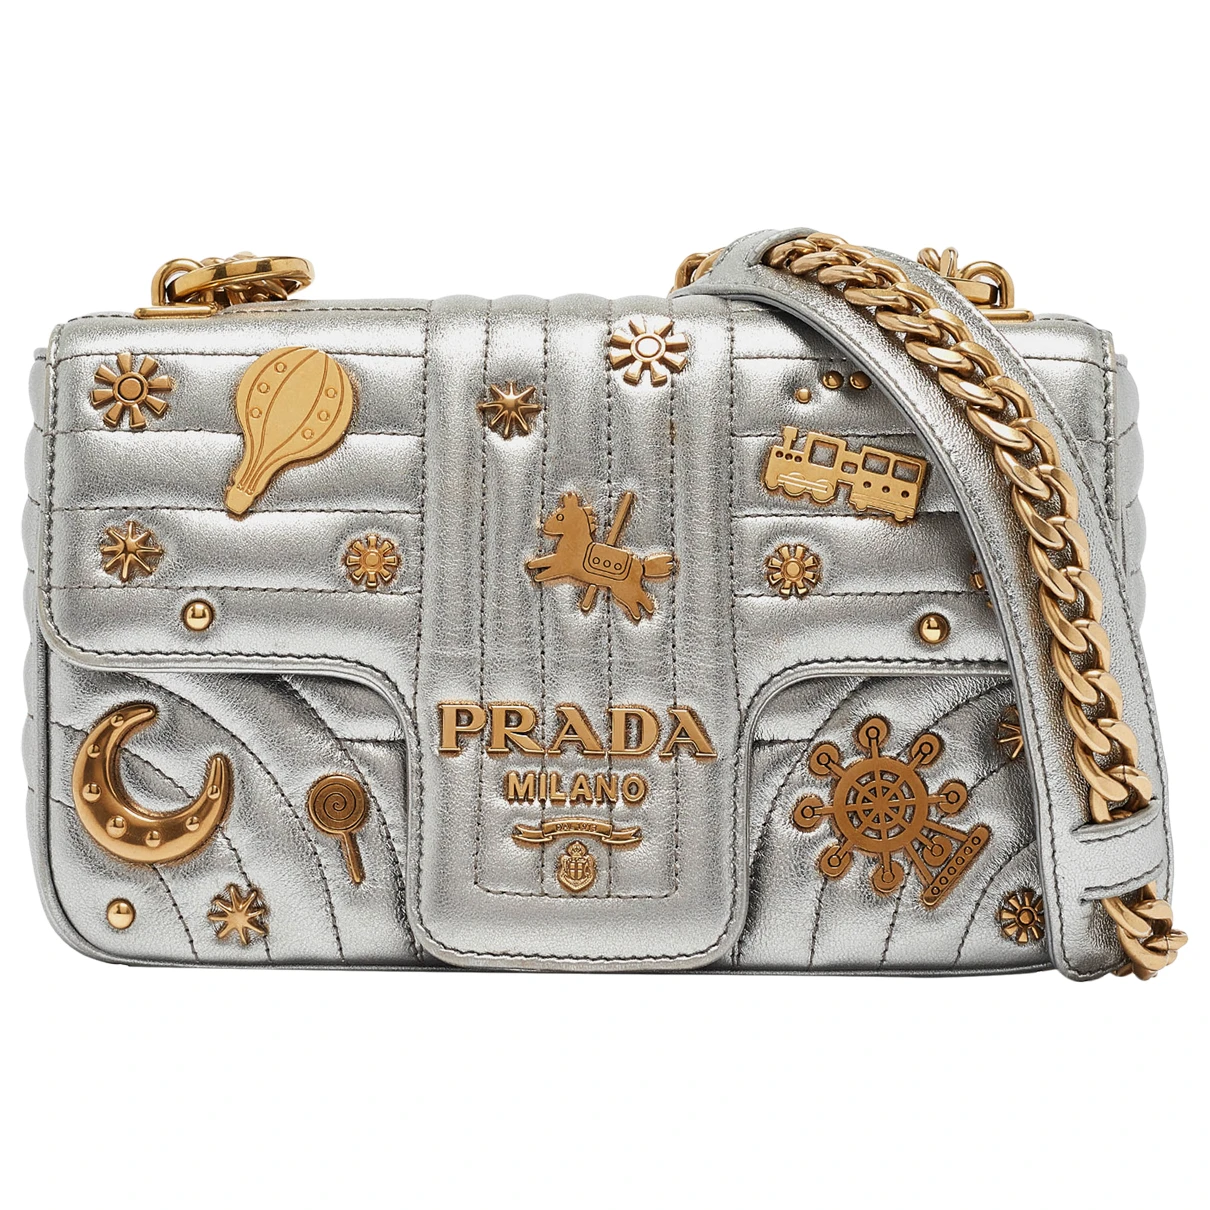 Pre-owned Prada Leather Handbag In Metallic